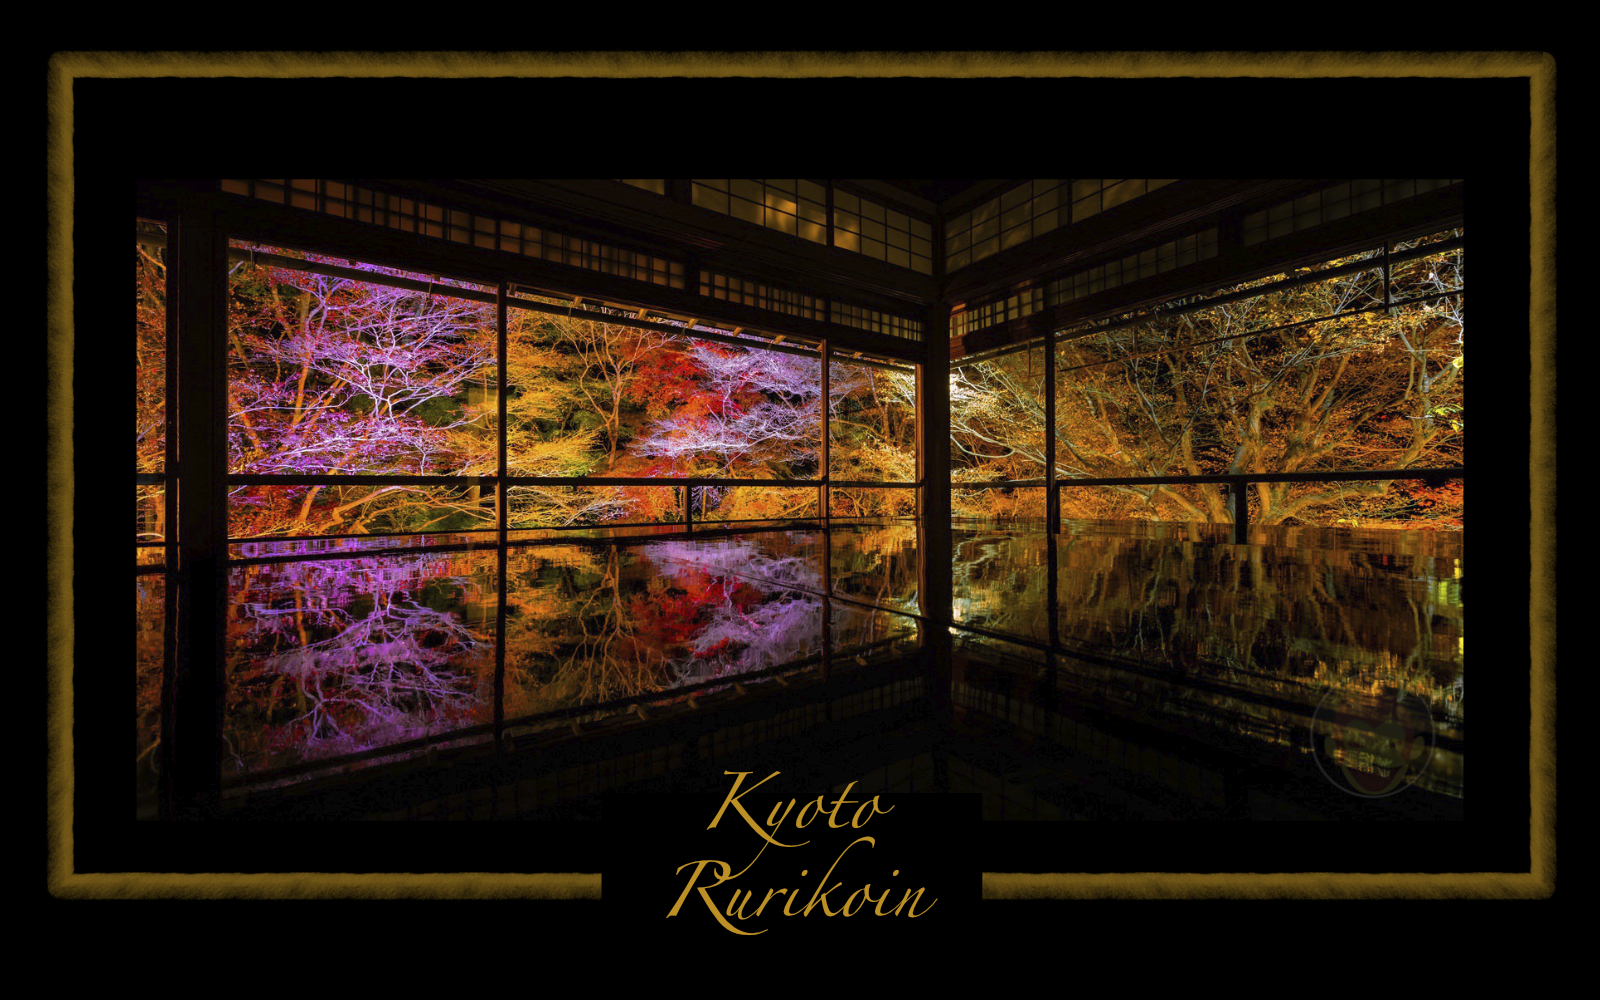 Kyoto-and-Rurikoin-Top-Image-2.jpg